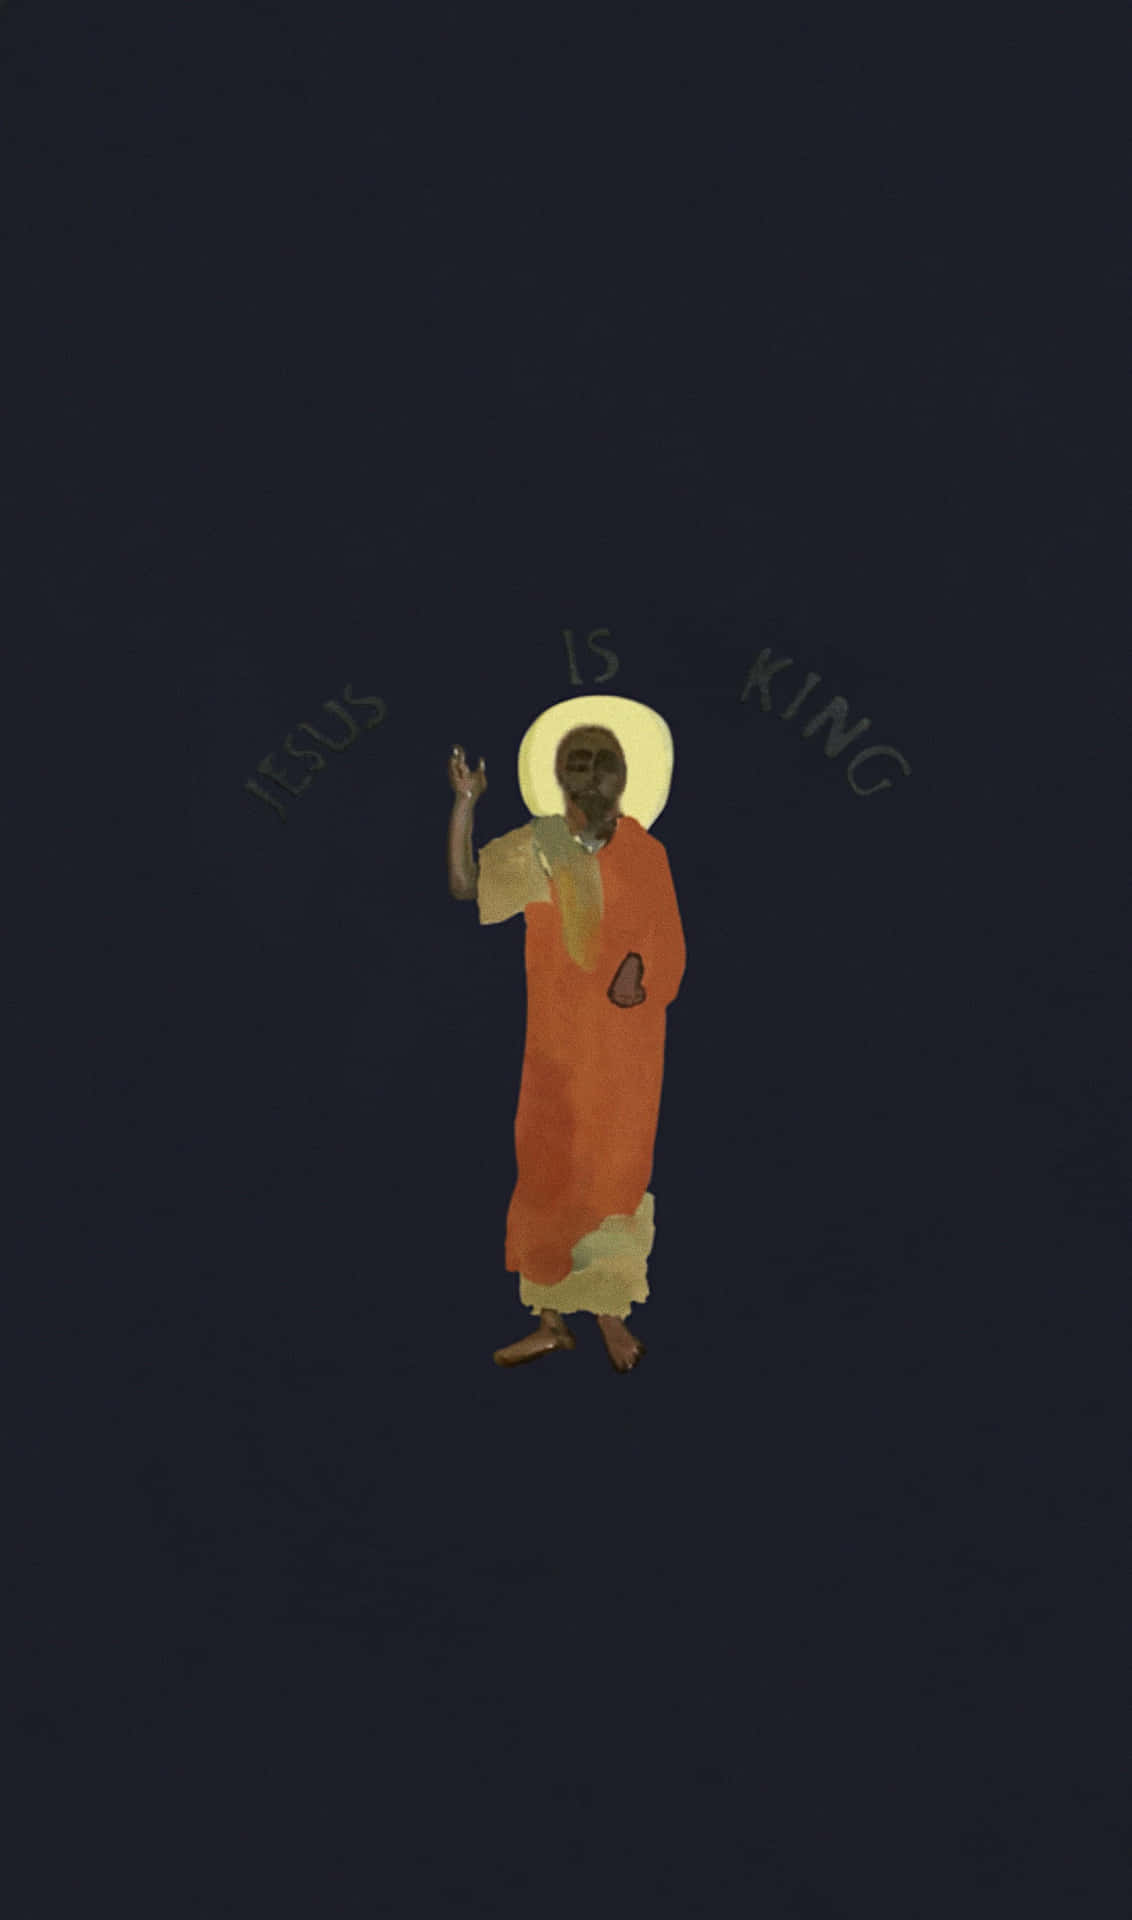 Jesus is King Wallpaper  Hip hop poster Kanye west wallpaper Beautiful  dark twisted fantasy